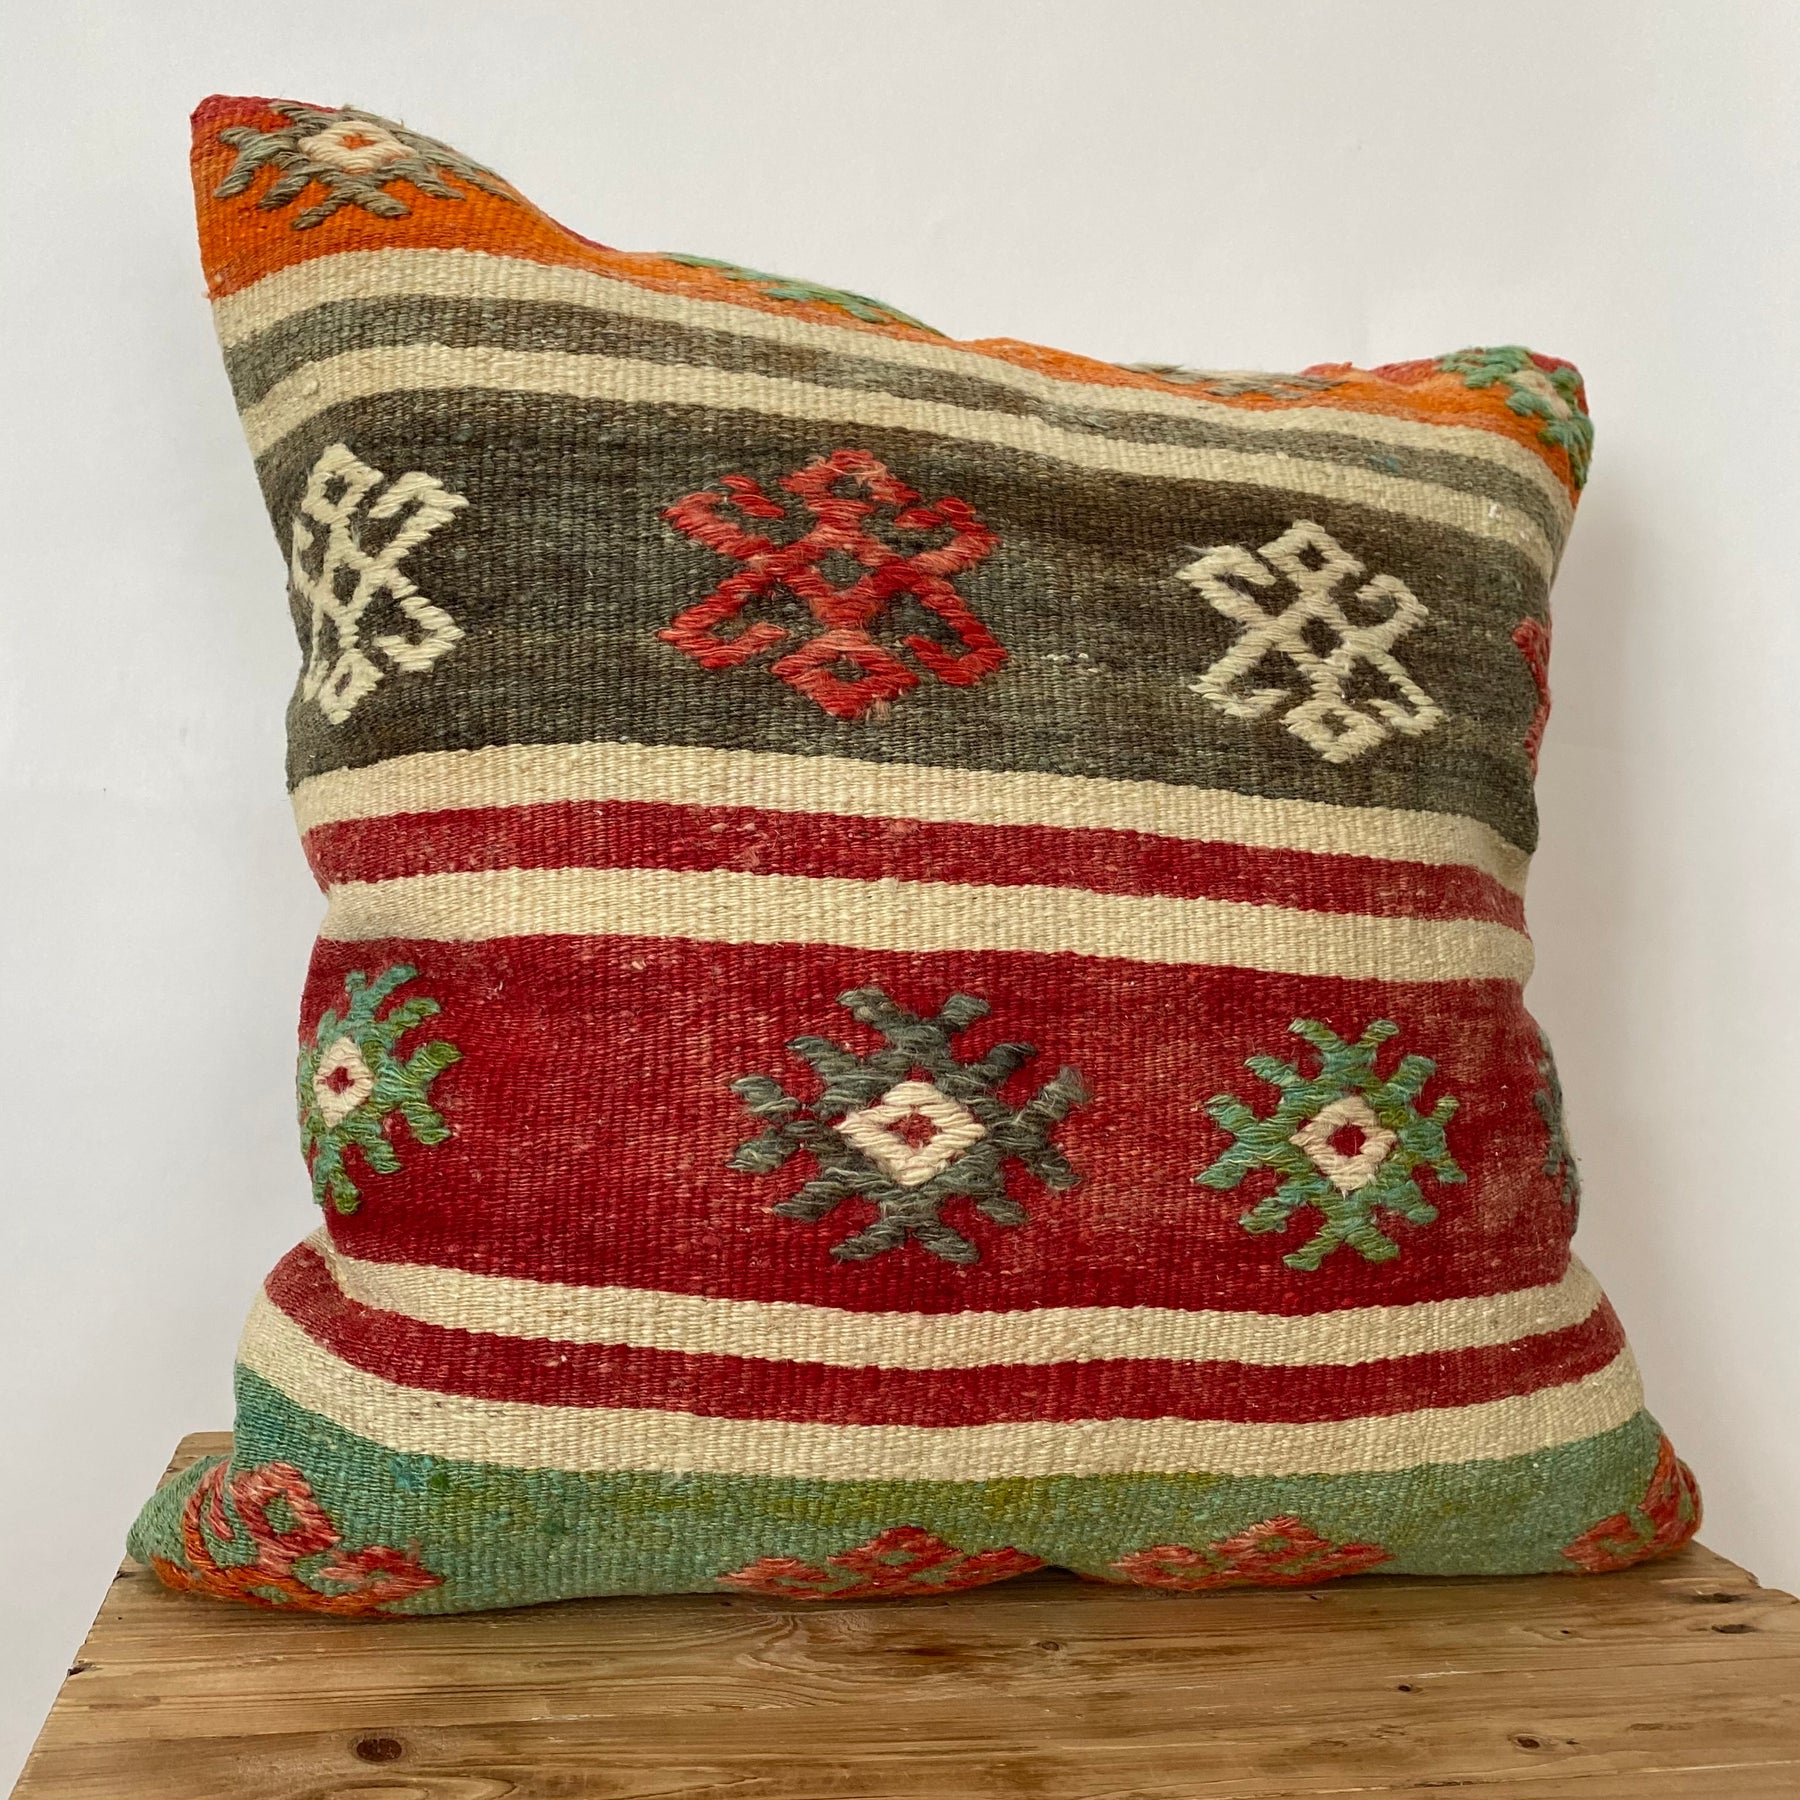 Ilyza - Multi Color Kilim Pillow Cover - kudenrugs